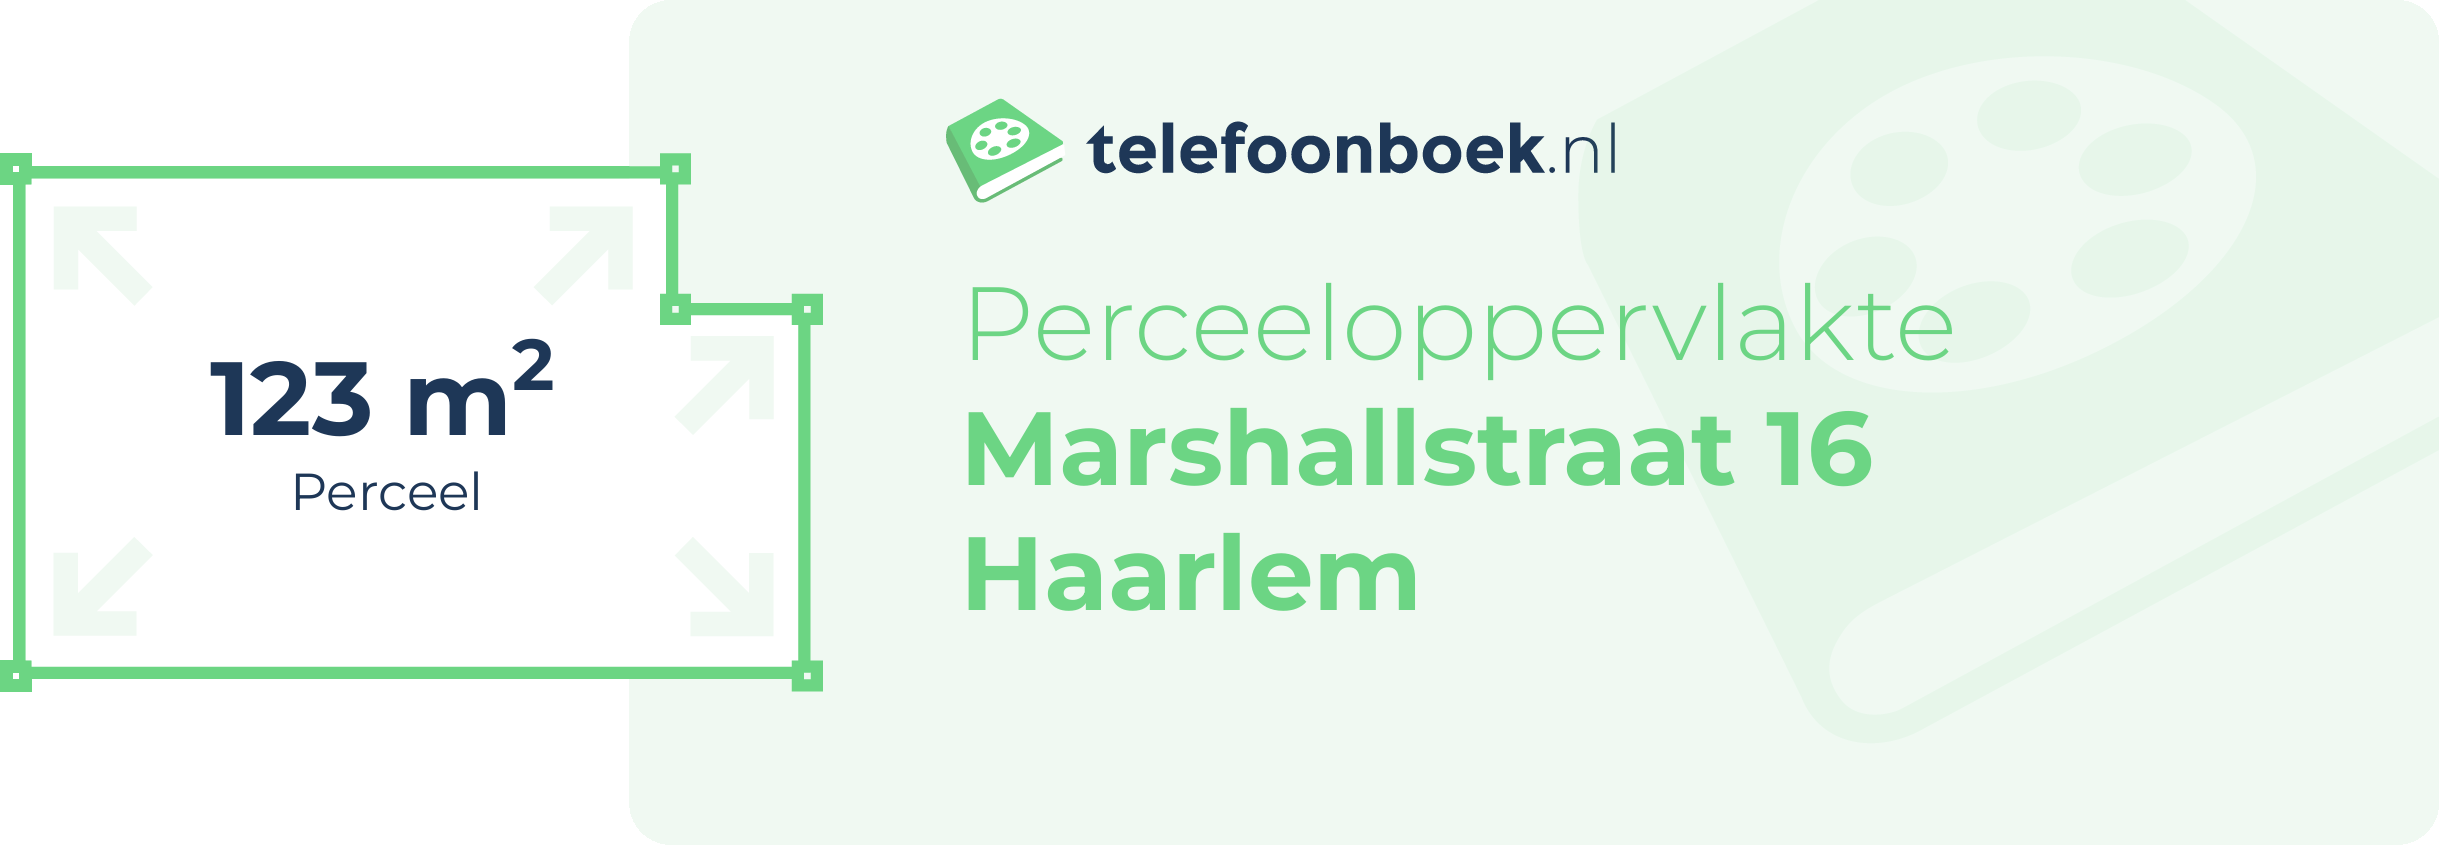 Perceeloppervlakte Marshallstraat 16 Haarlem